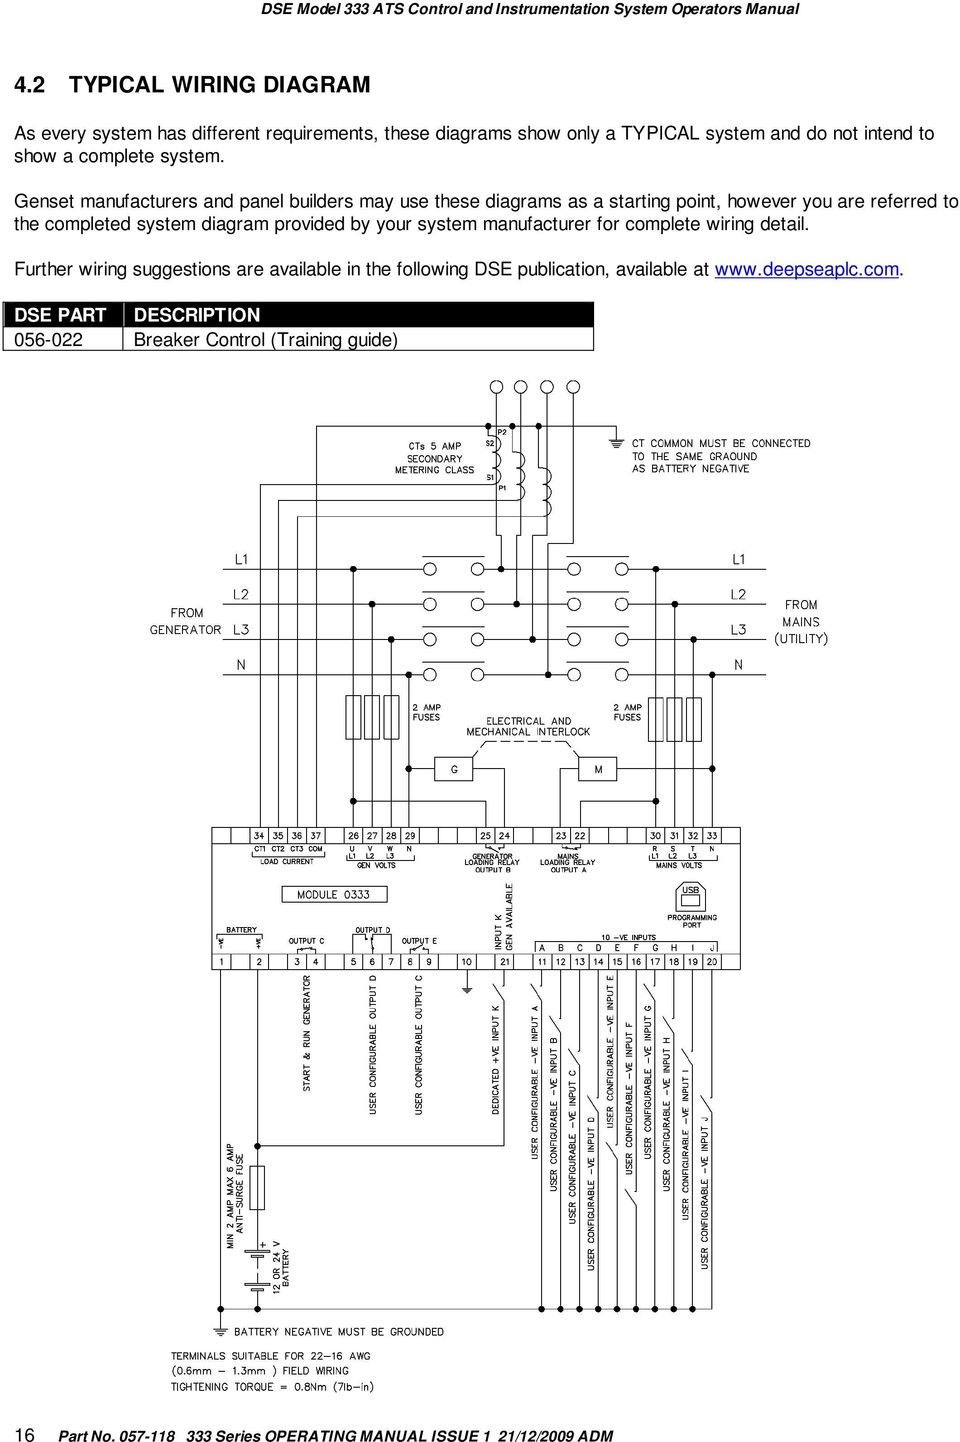 dse 7320 user manual pdf